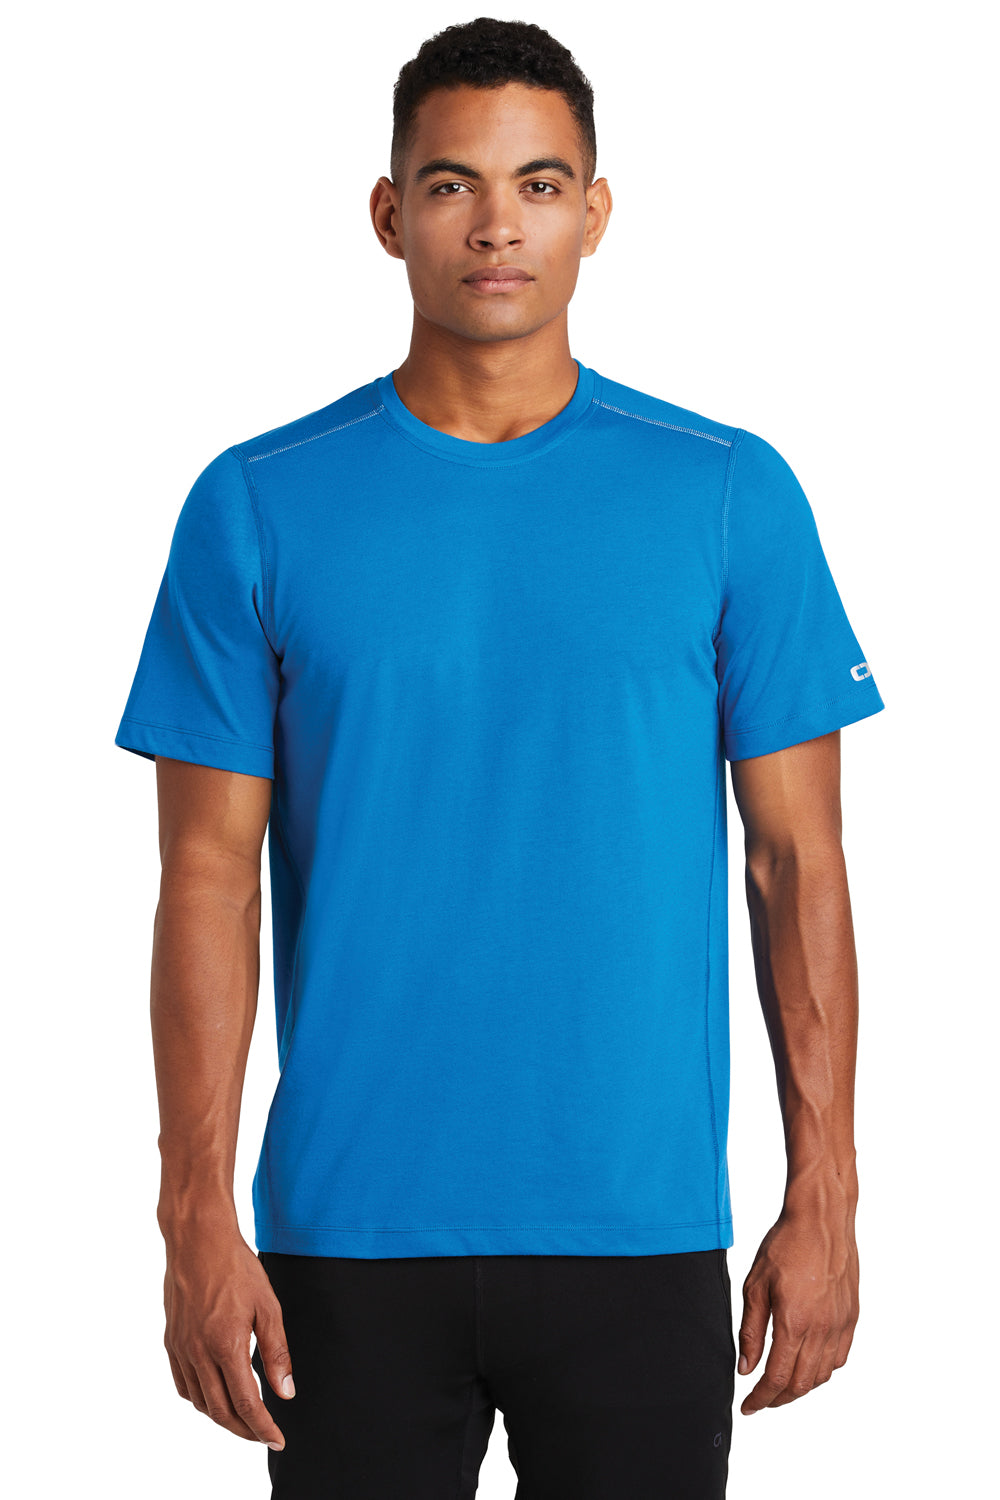 Ogio OE336 Mens Endurance Peak Jersey Moisture Wicking Short Sleeve Crewneck T-Shirt Blue Front